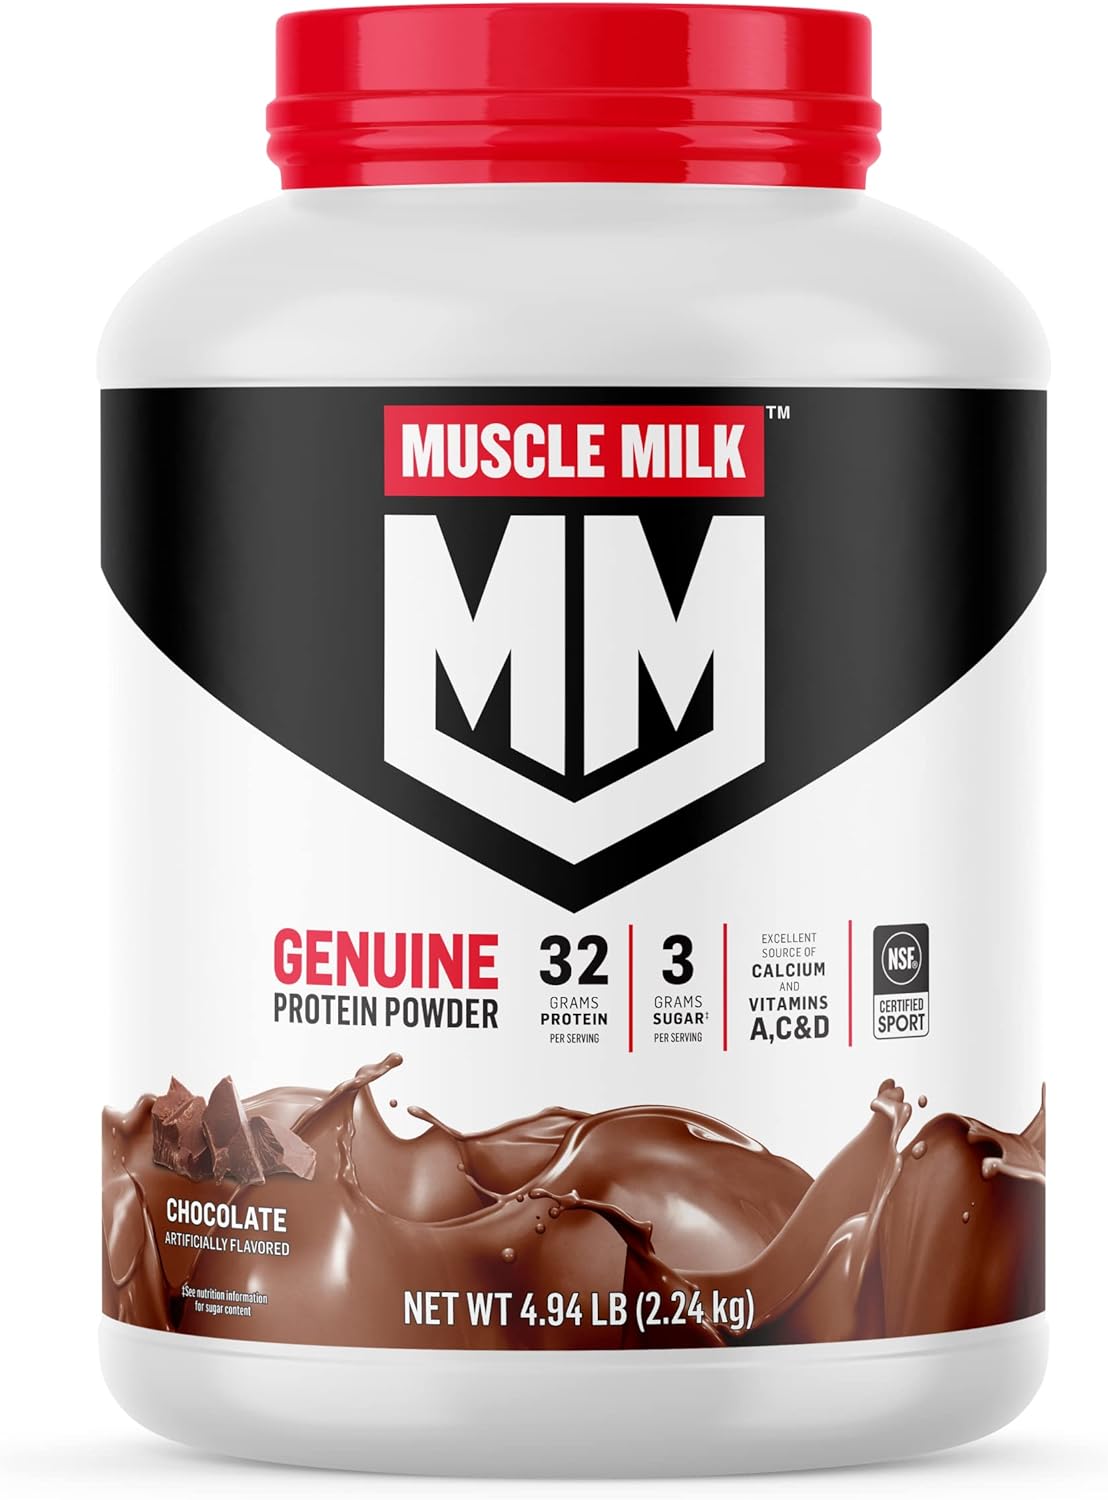 Muscle Milk Genuine Protein Powder, Chocolate, 4.94 Pound, 32 Servings